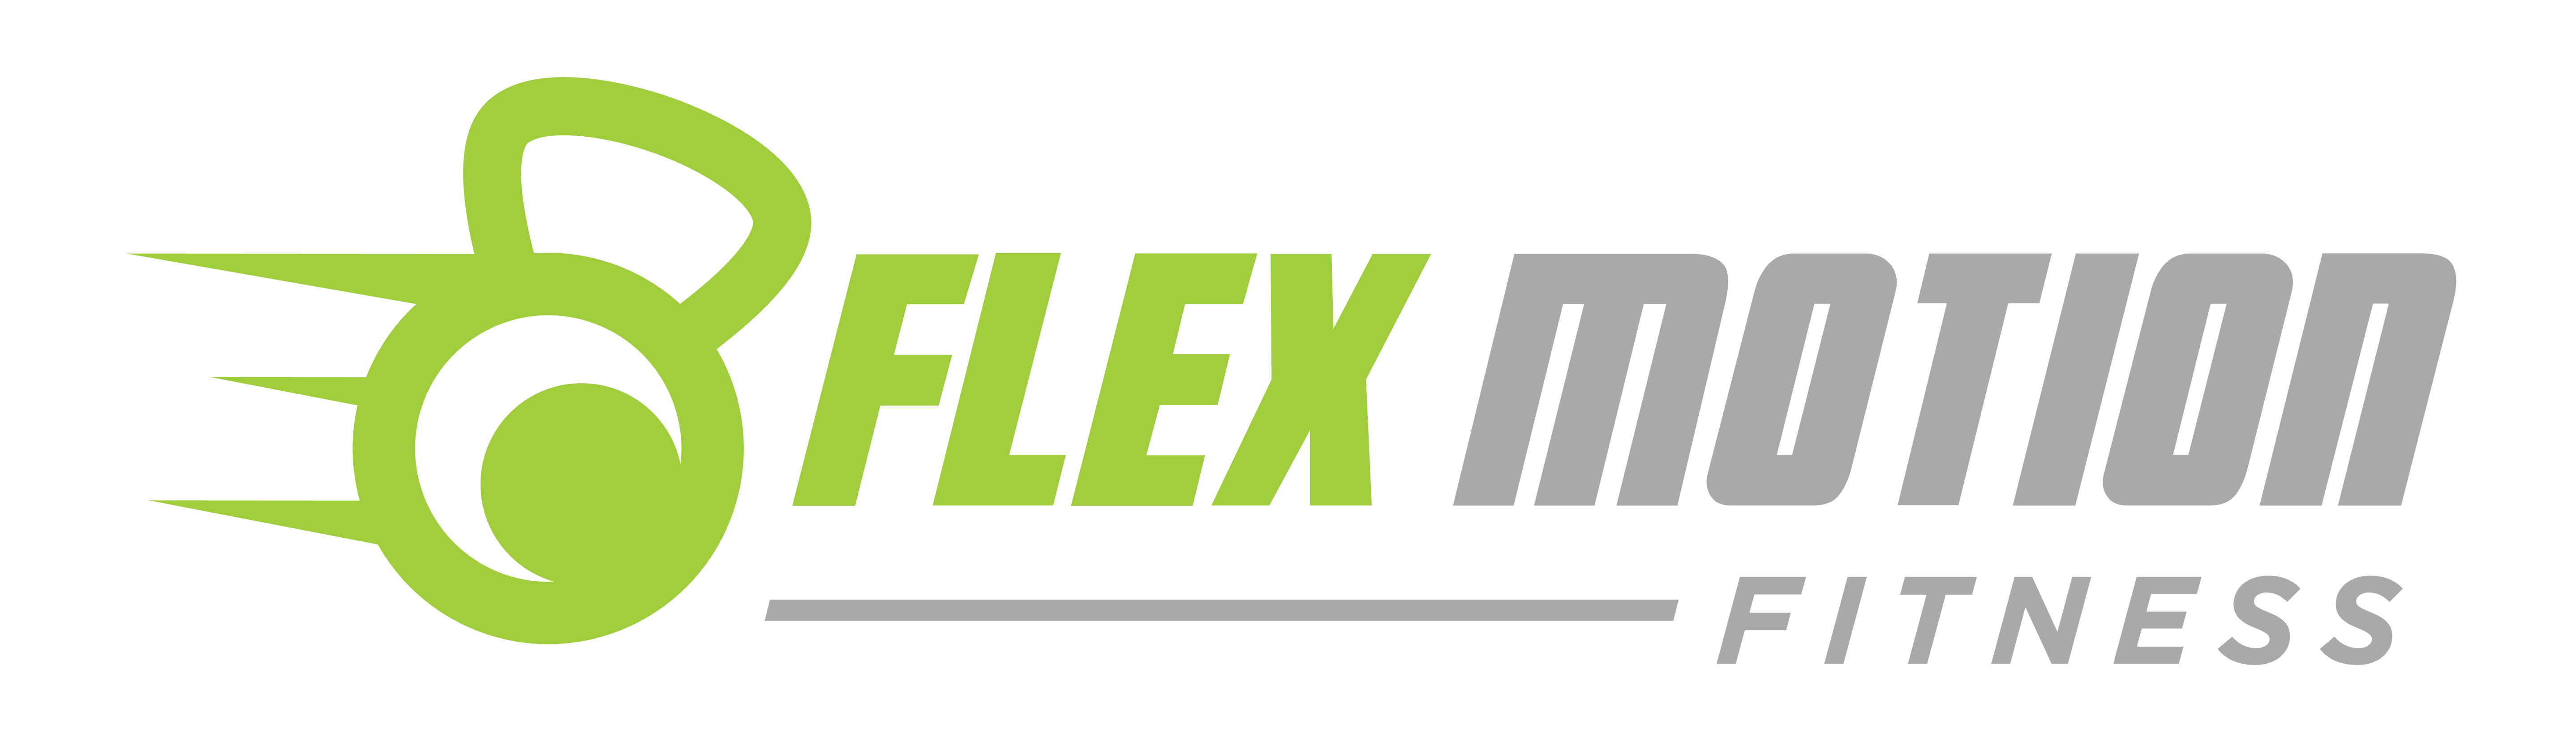 Motion Flex